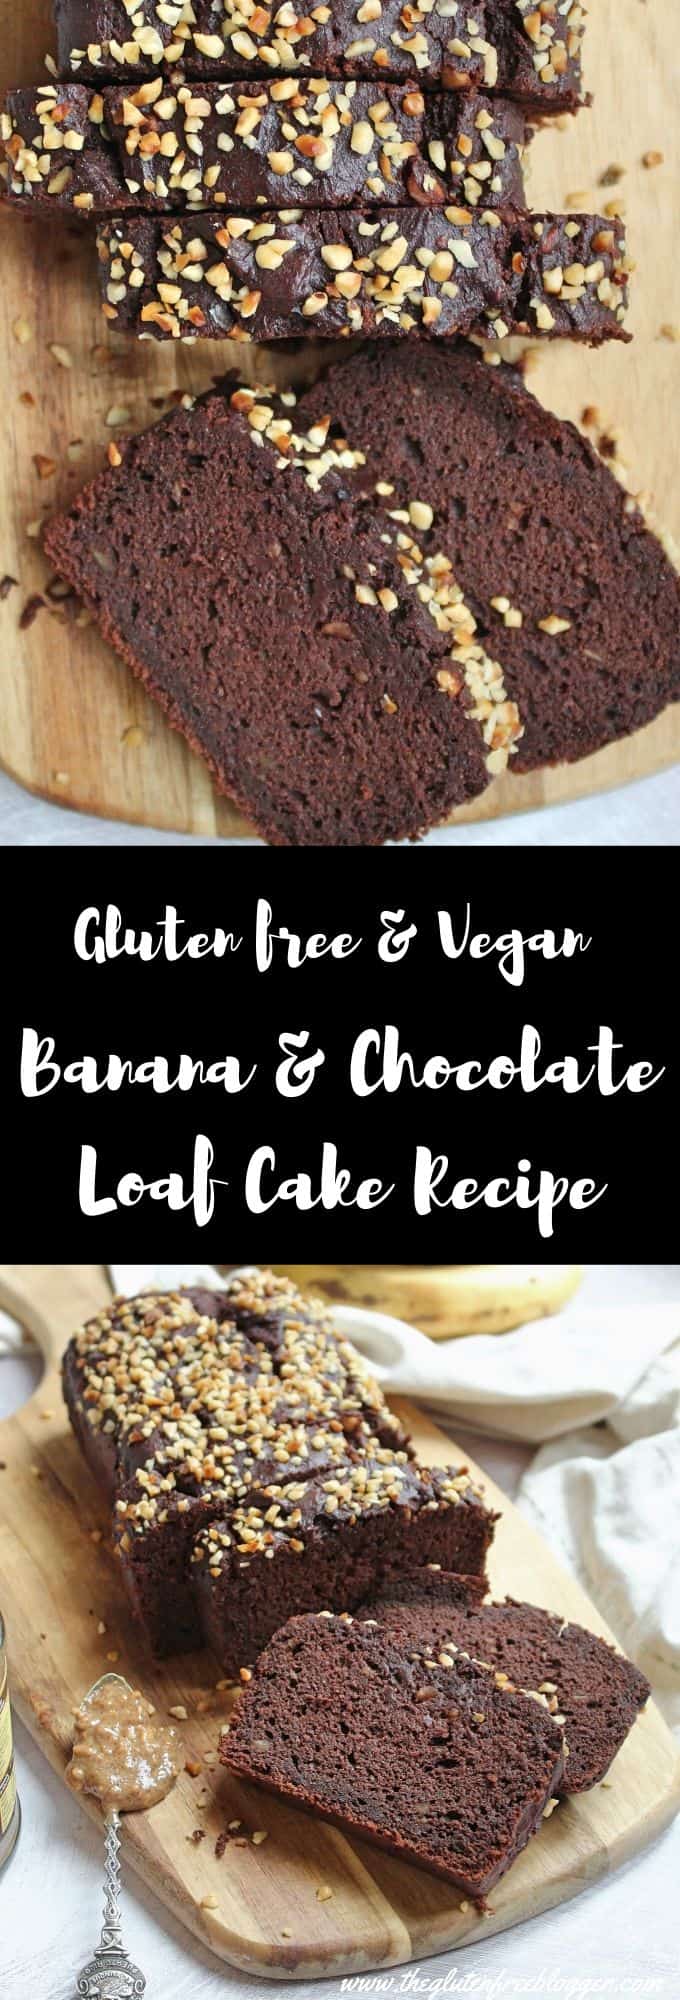 chocolate and banana loaf cake recipe - gluten free dairy free egg free and vegan